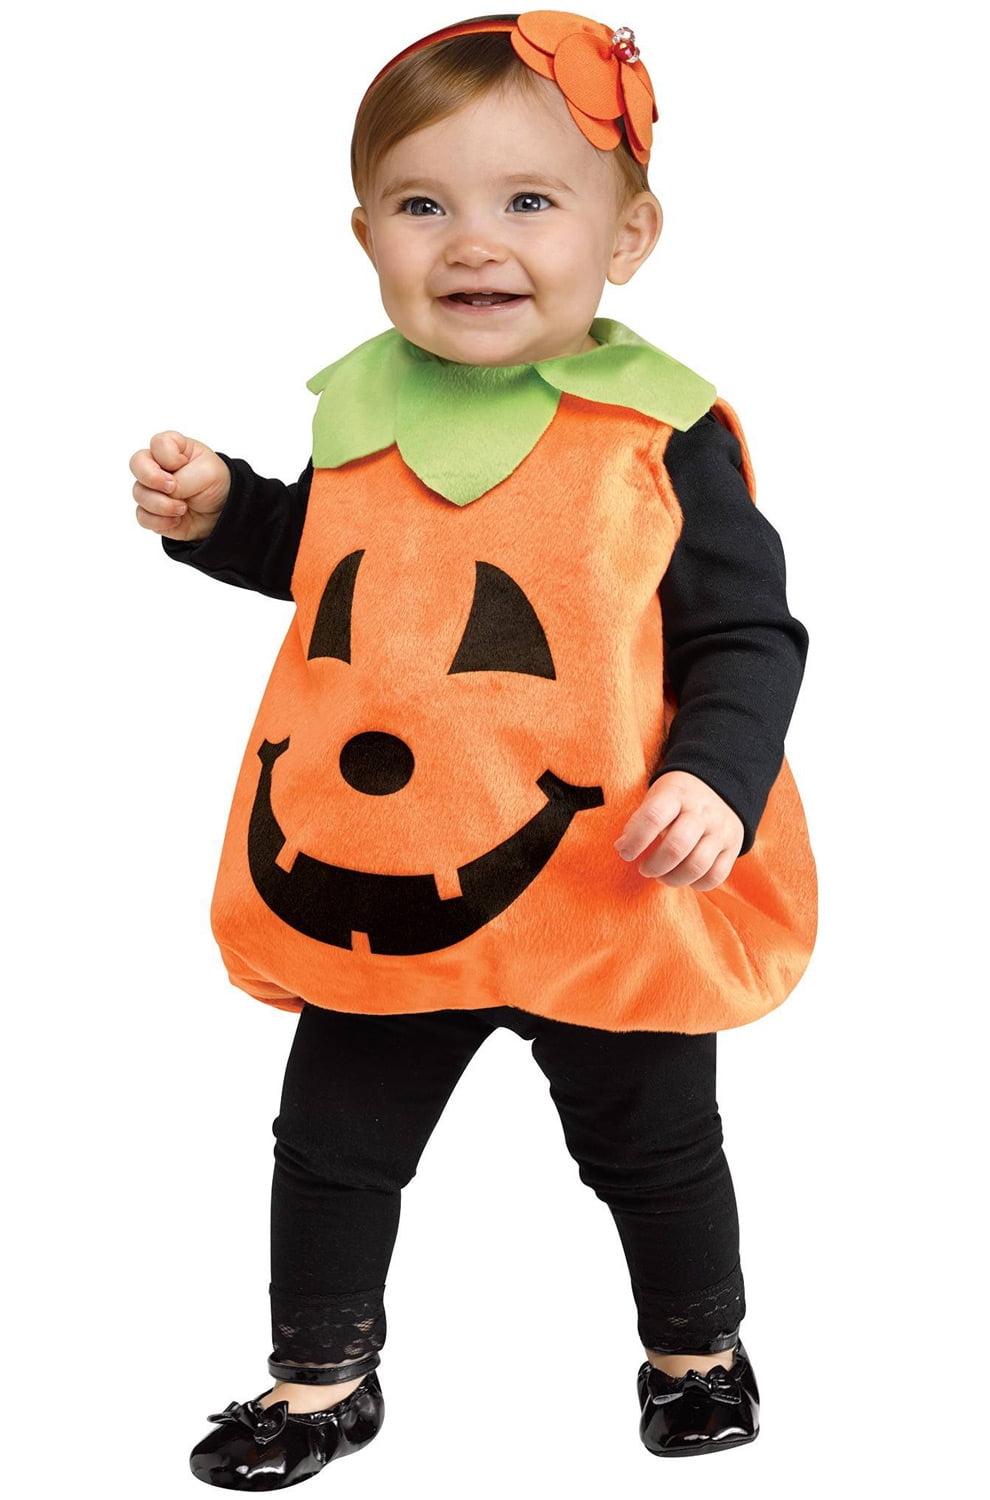 Jolly Jack O'Lantern Infant Costume - Walmart.com